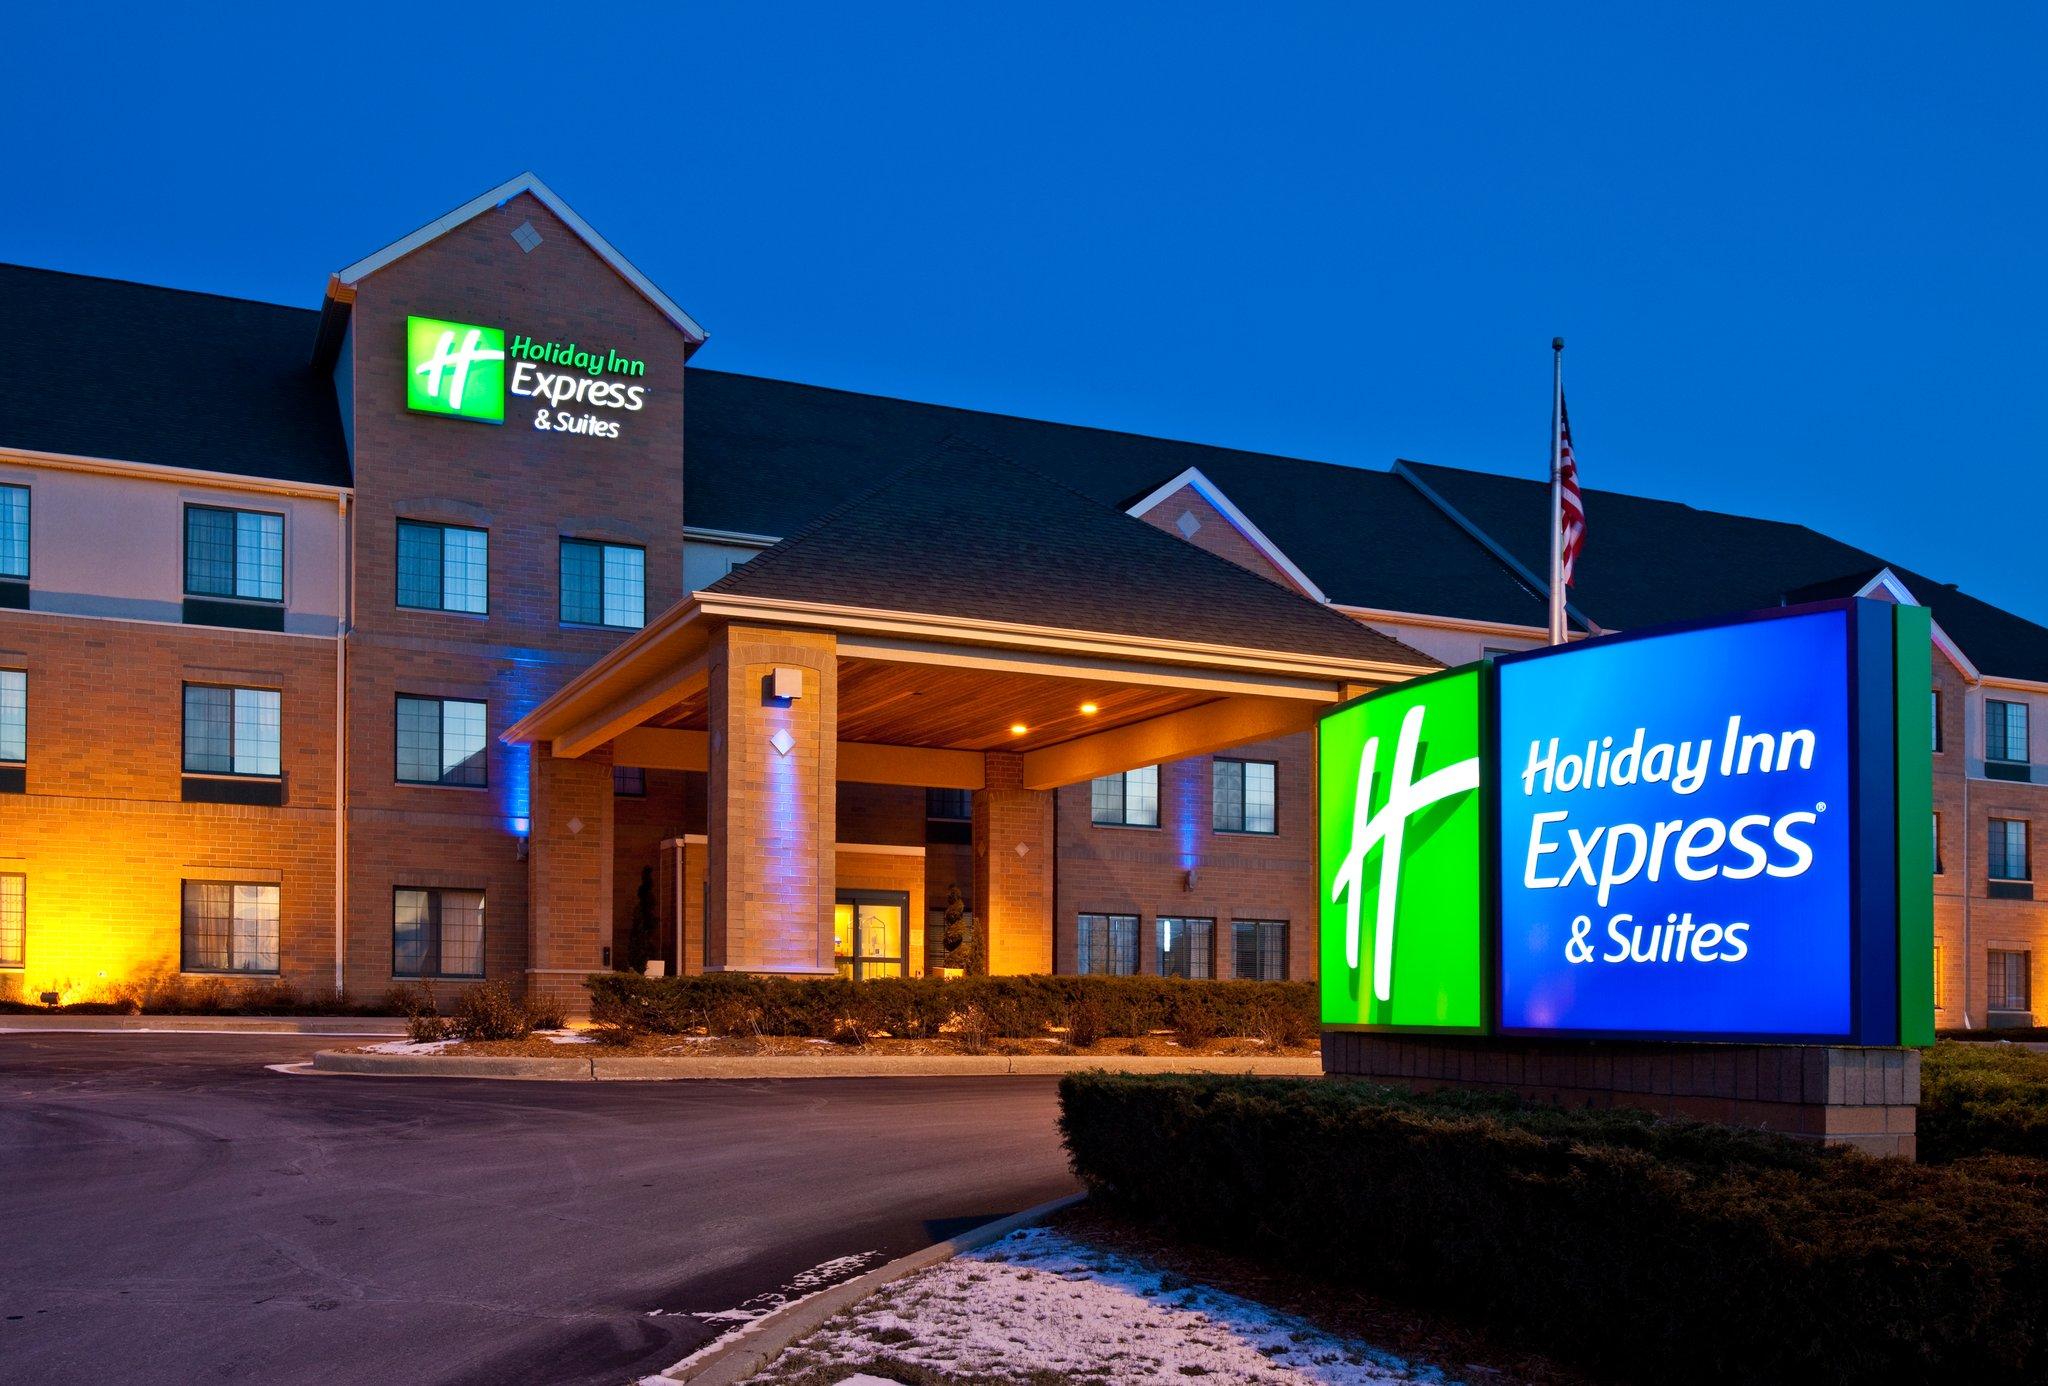 Holiday Inn Express Hotel & Suites Pleasant Prairie / Kenosha in Pleasant Prairie, WI